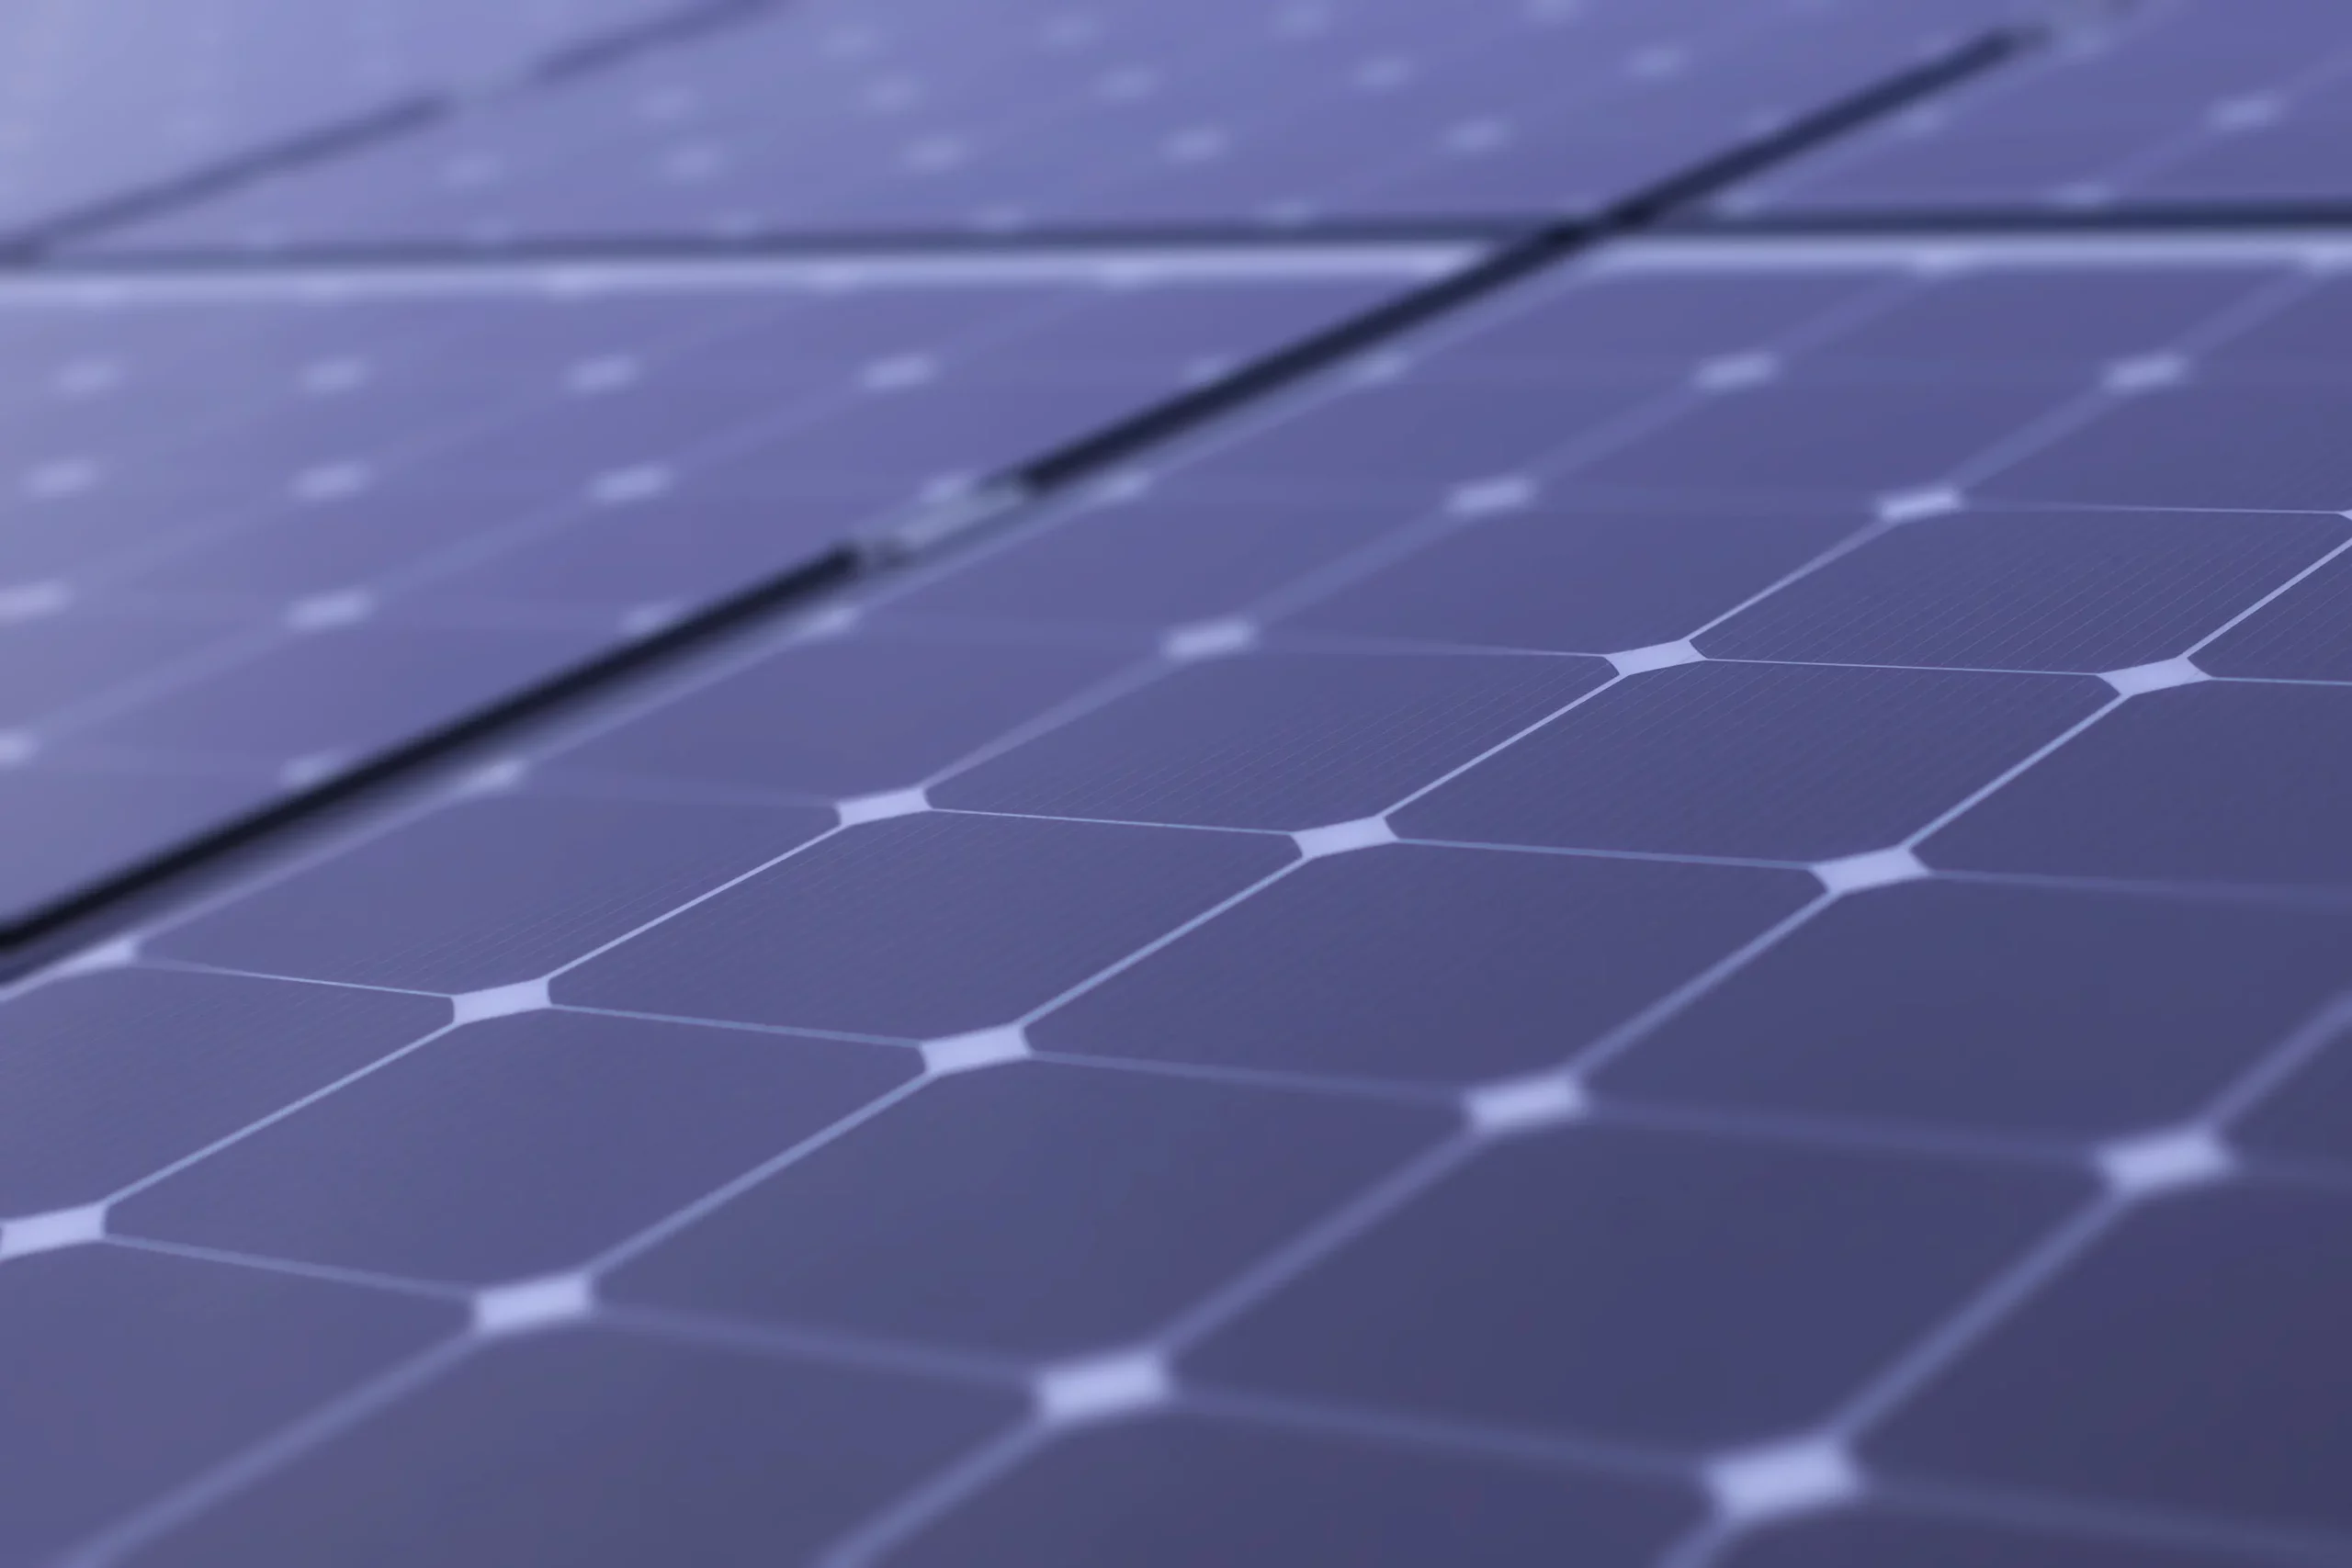 solar-panel-cells-close-up-alternative-energy